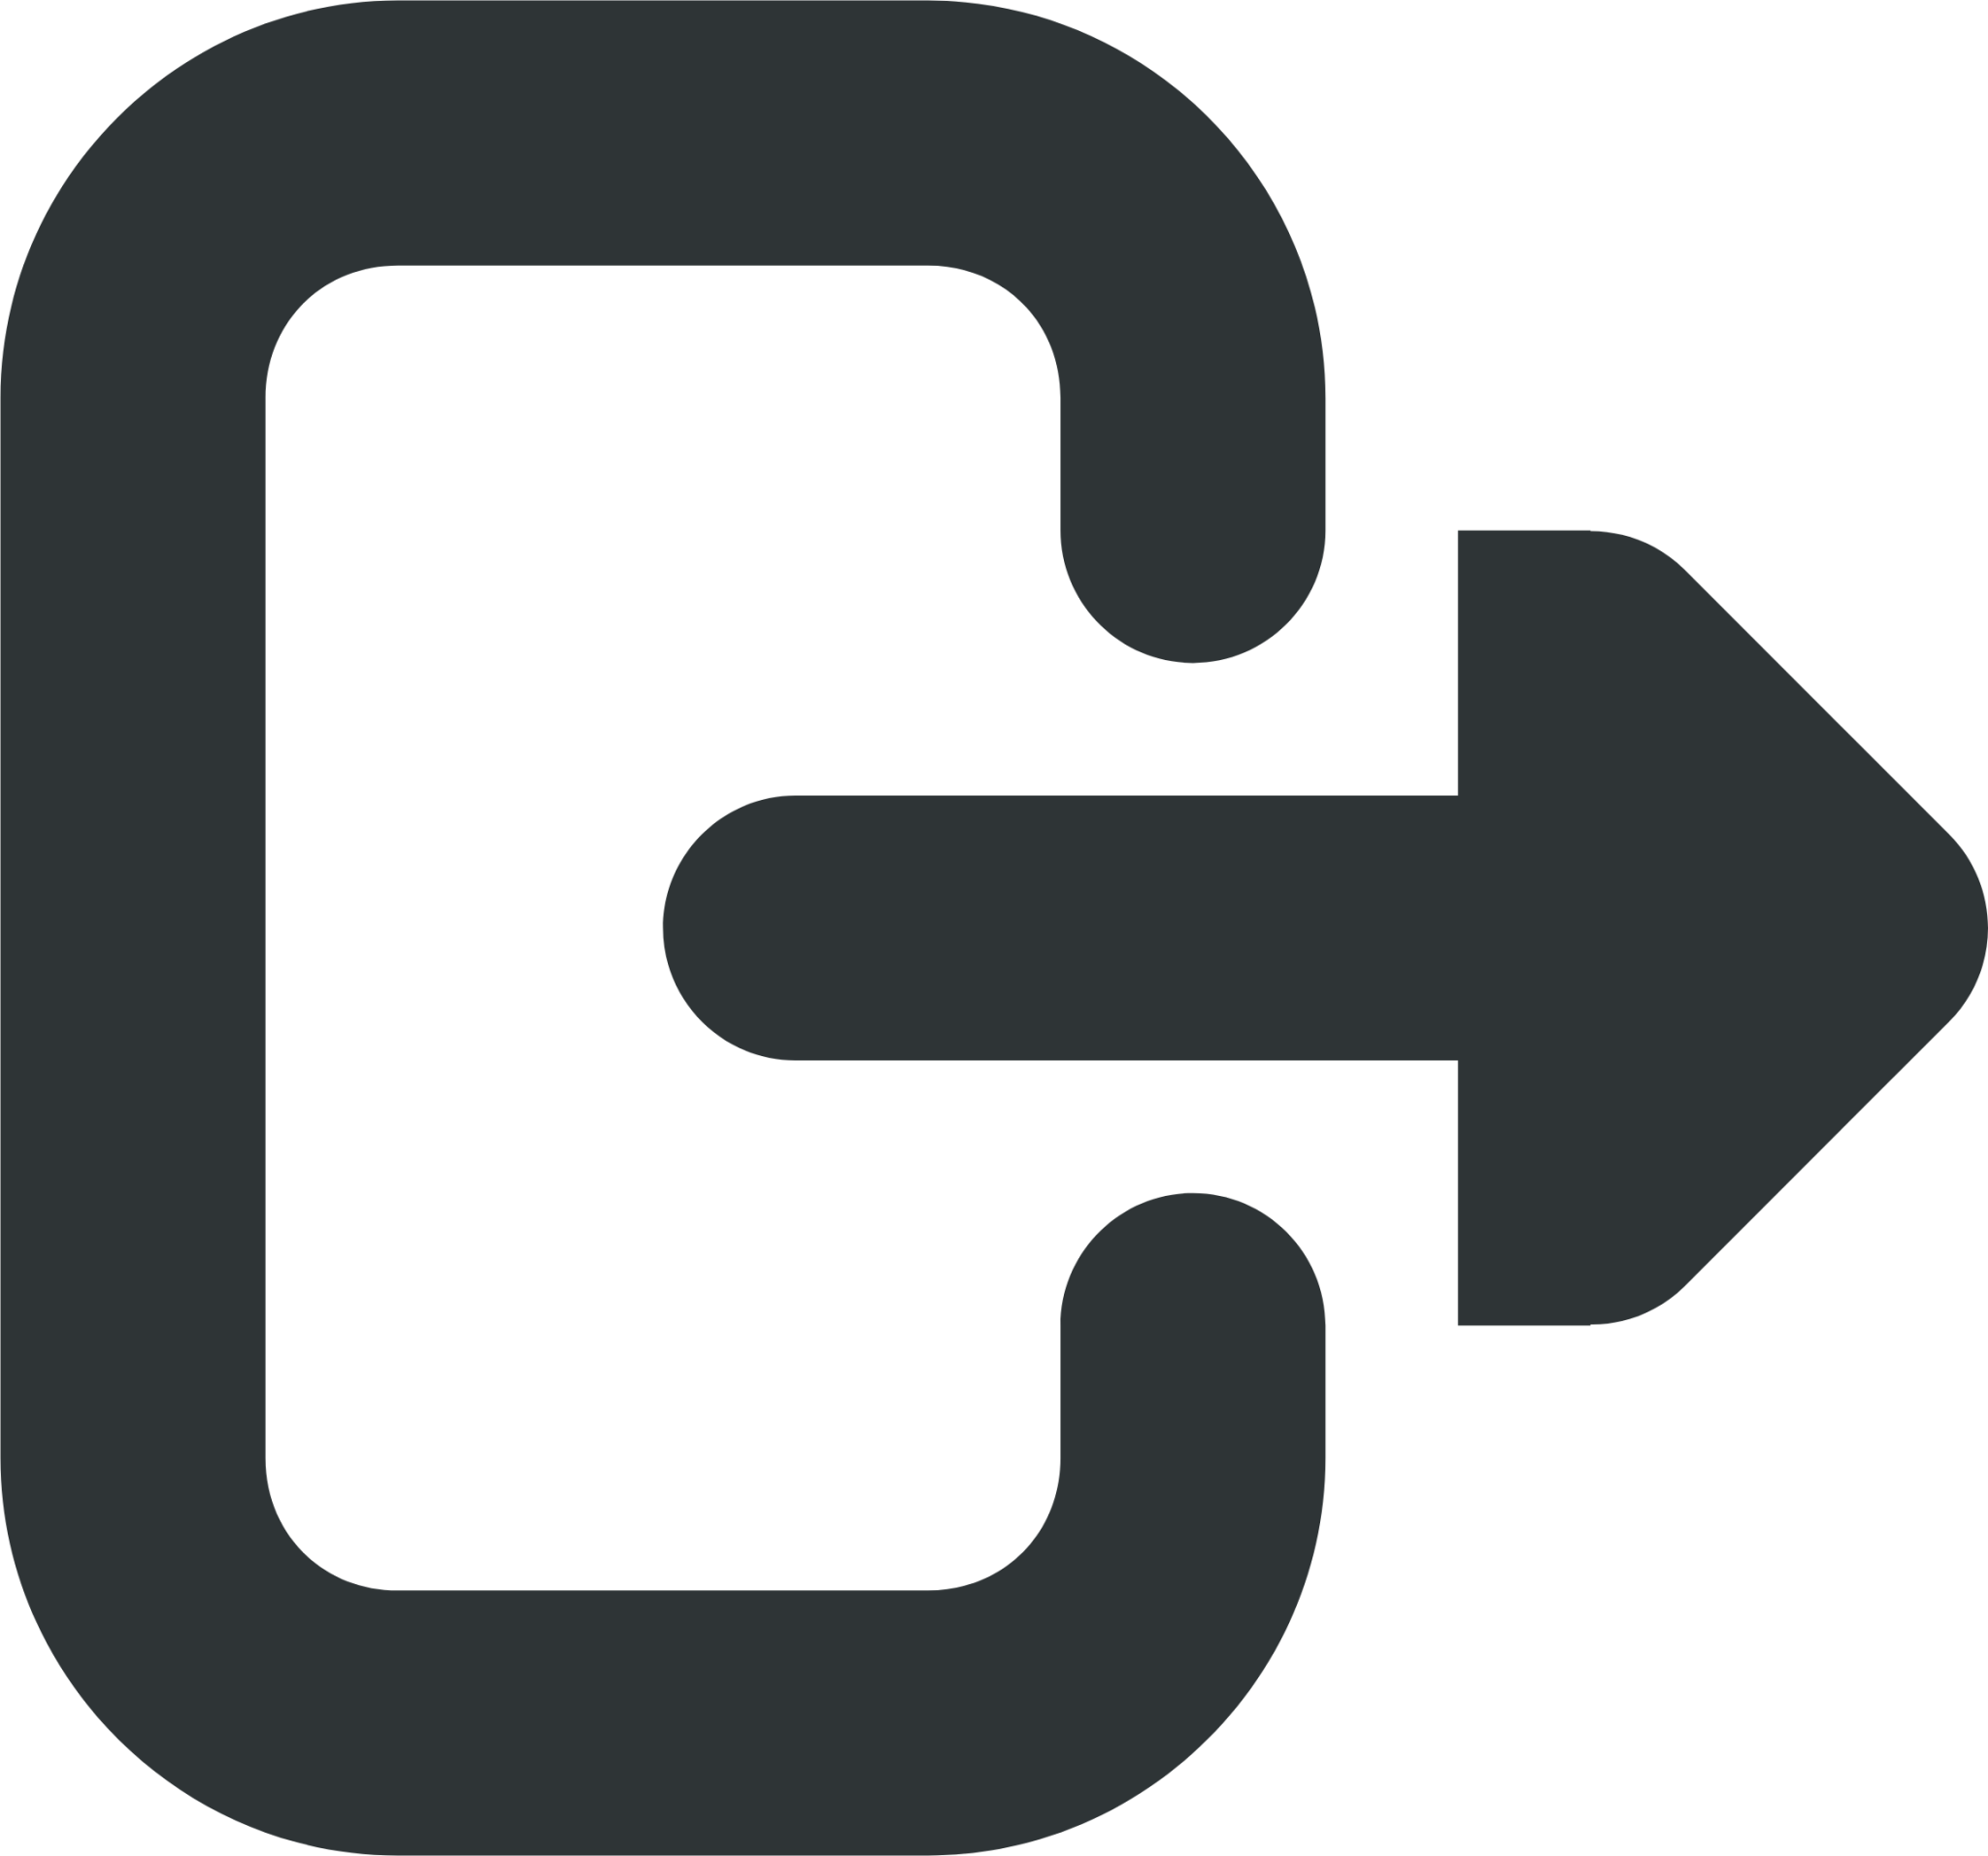 application exit symbolic icon